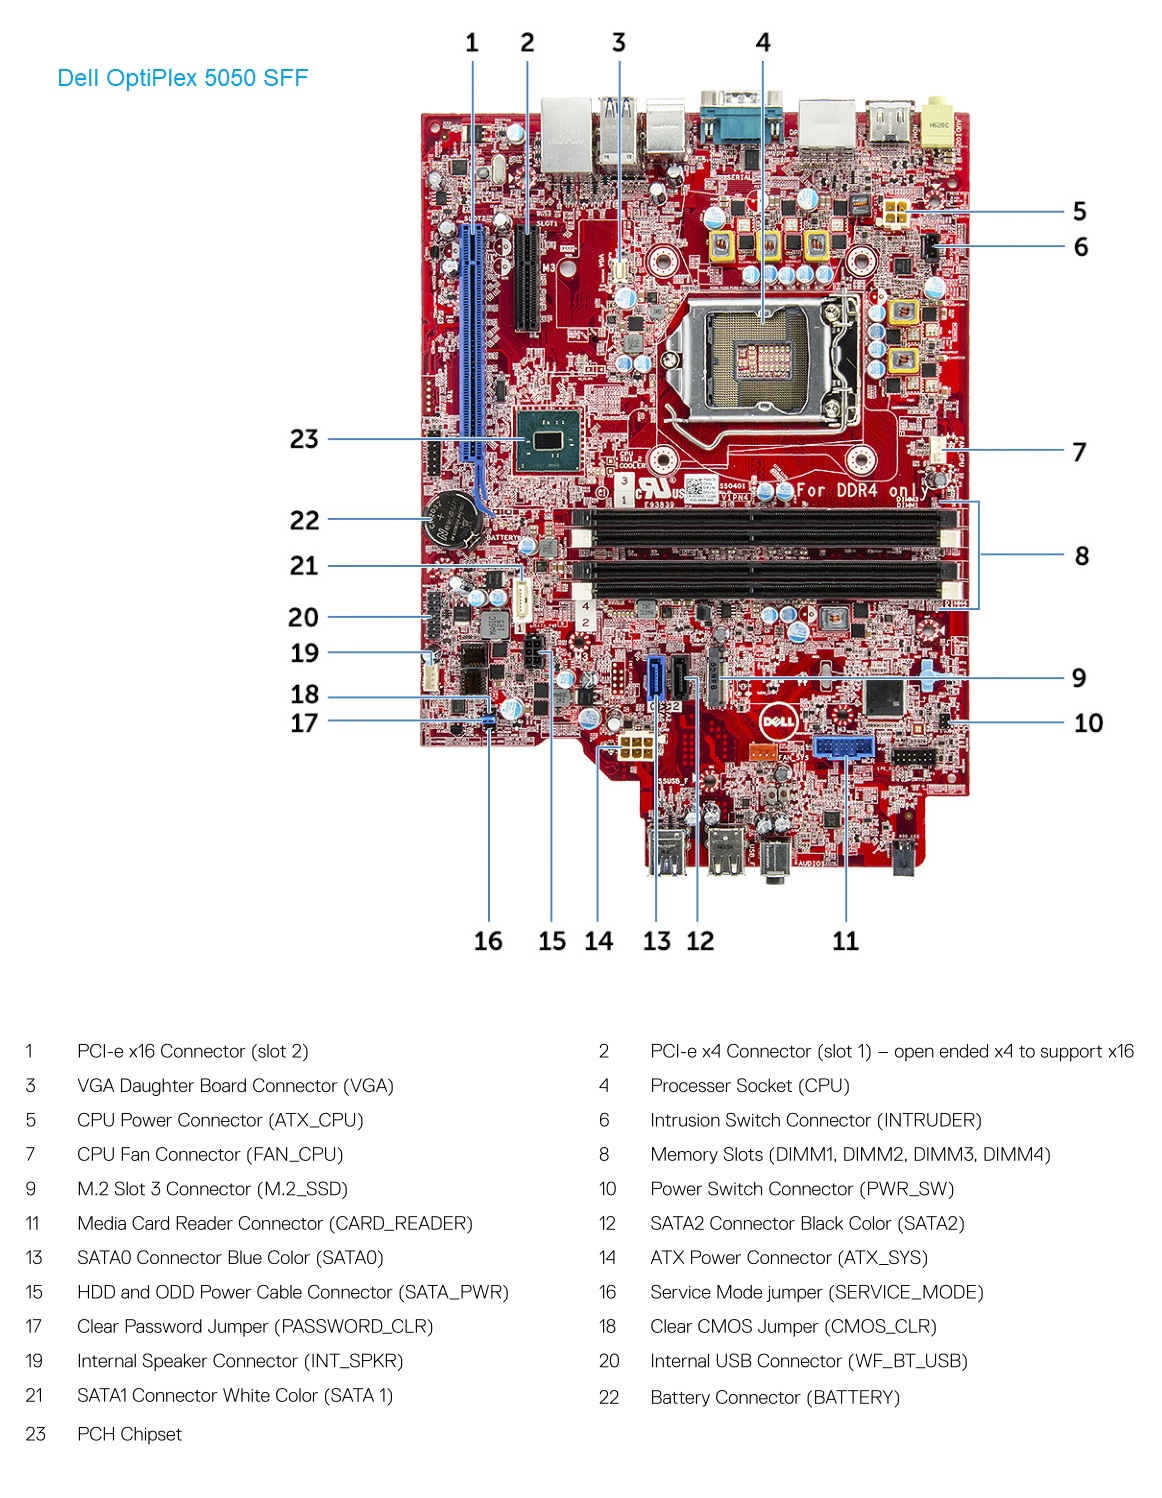 Dell_OptiPlex_5050_SFF_motherboard.jpg motherboard layout